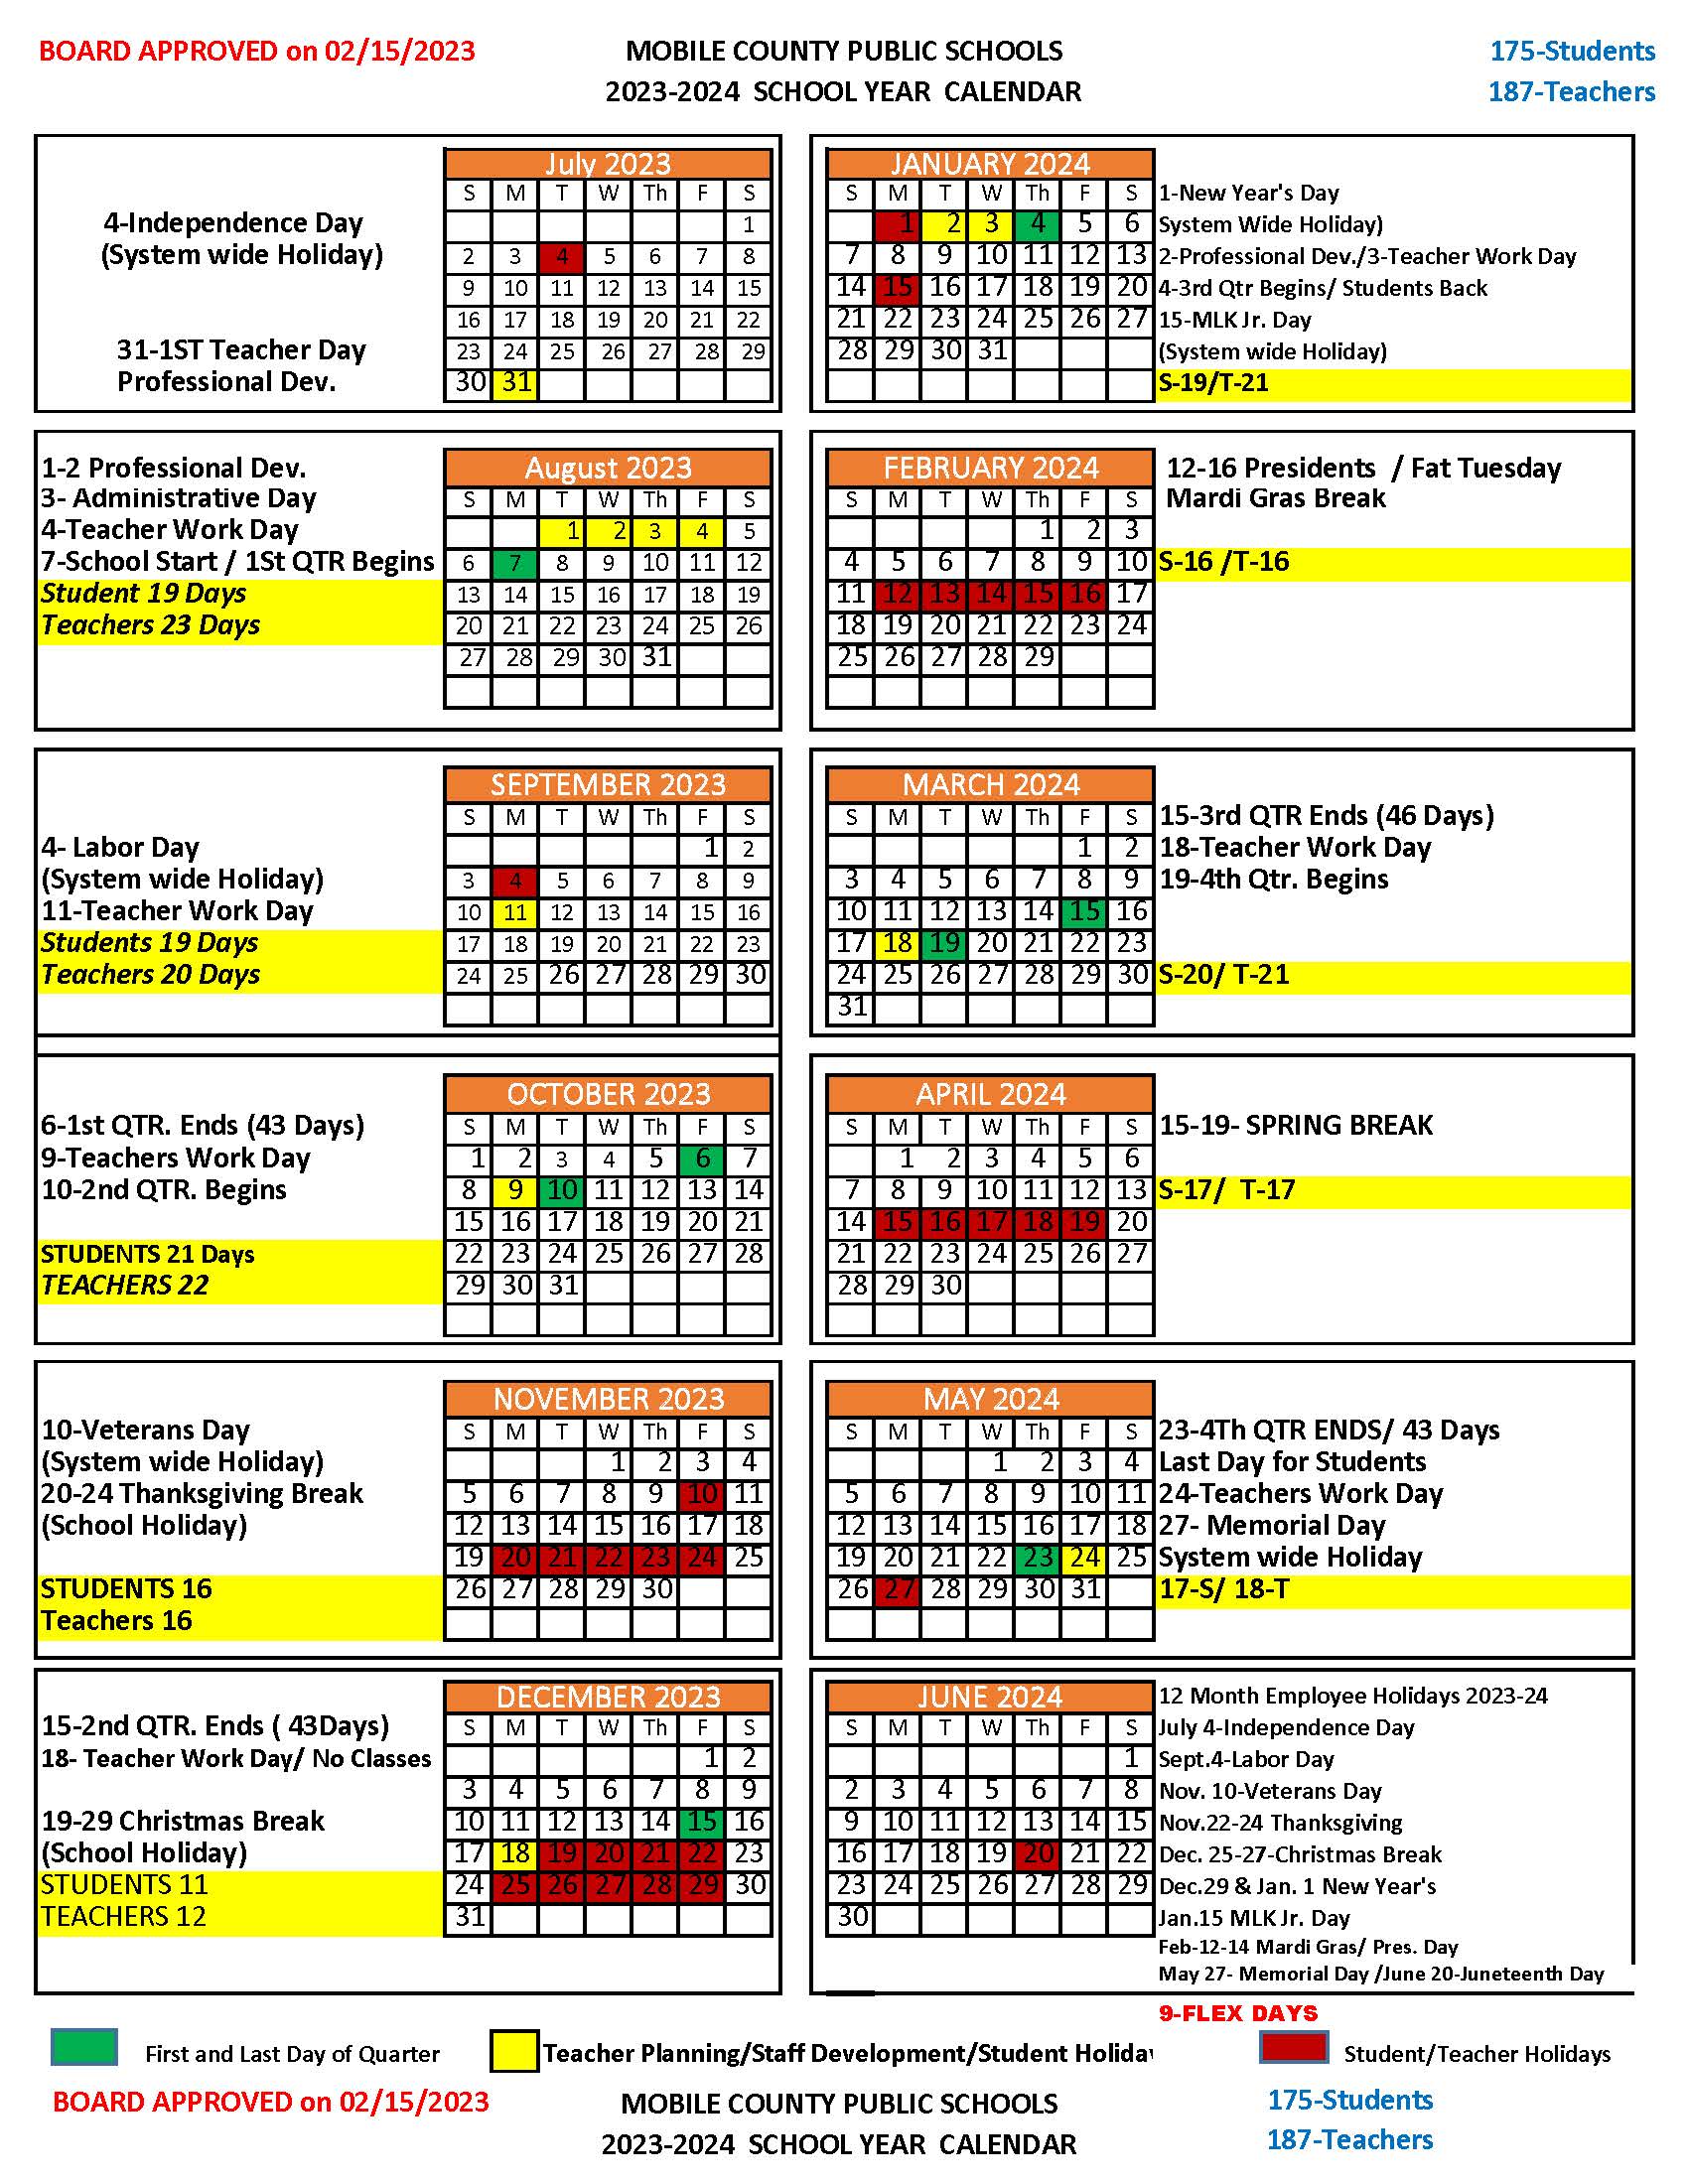 School Calendar 23-24